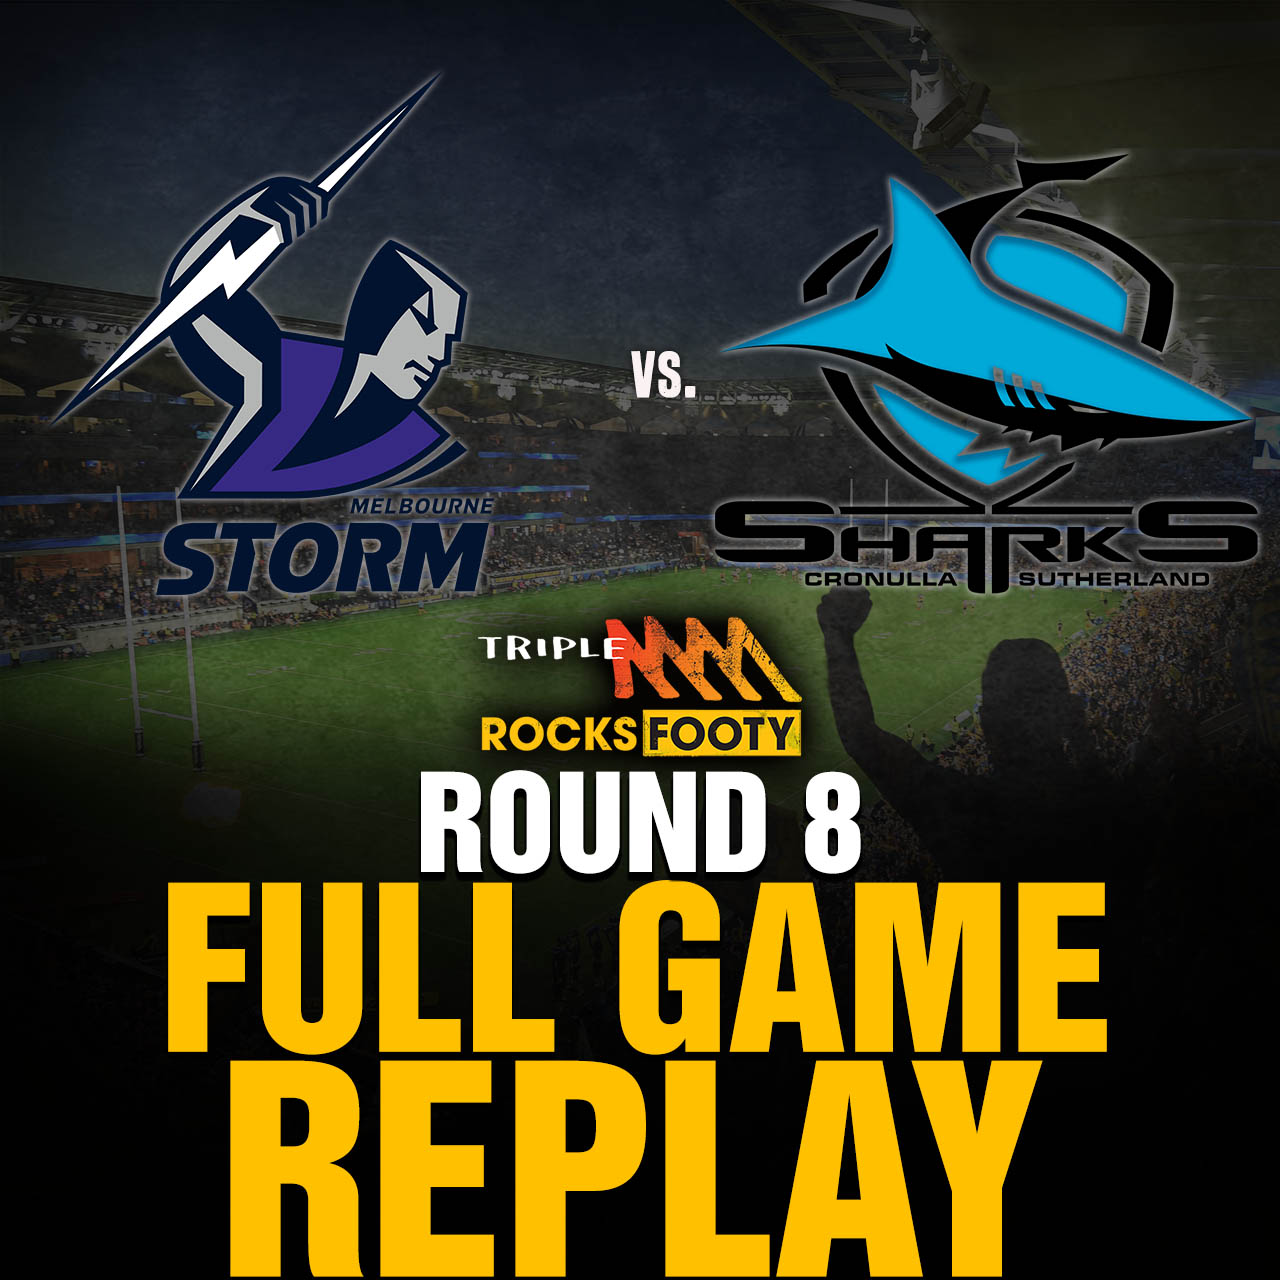 FULL GAME REPLAY | Melbourne Storm vs. Cronulla Sharks